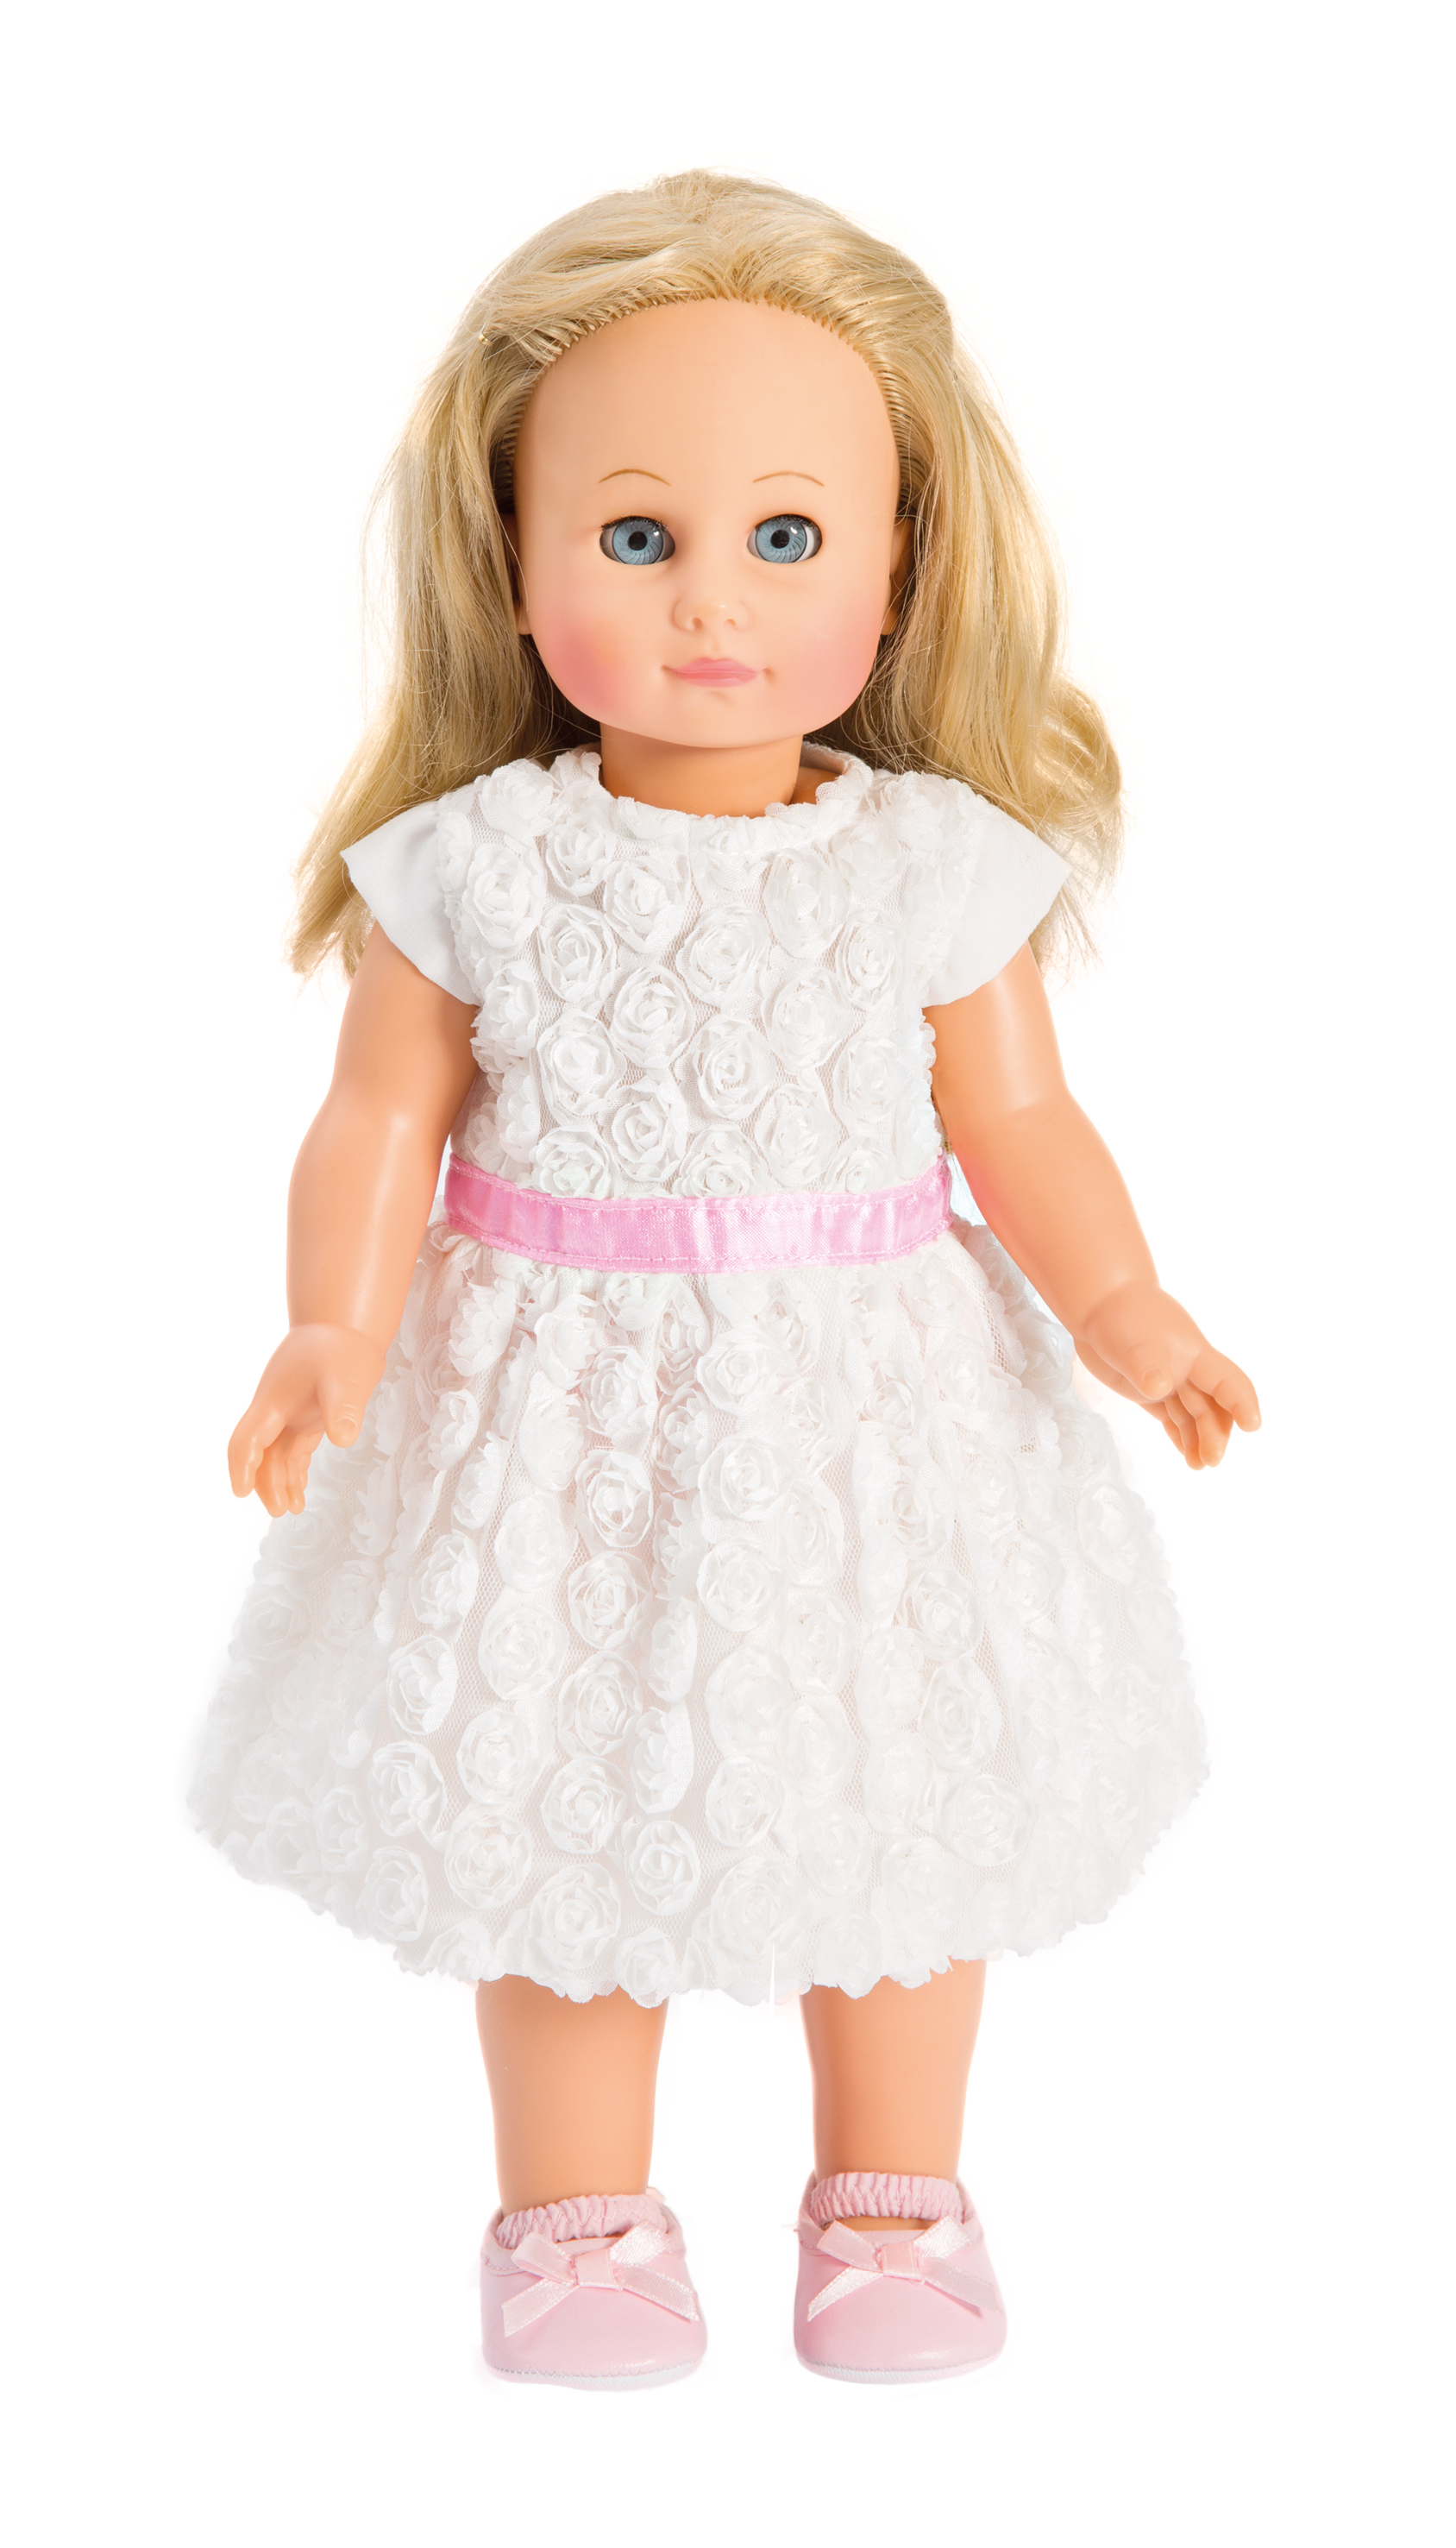 Heless Kleidungsset Traumkleid 35-45 cm Kleid Puppe Puppenkleid Brautkleid NEU 